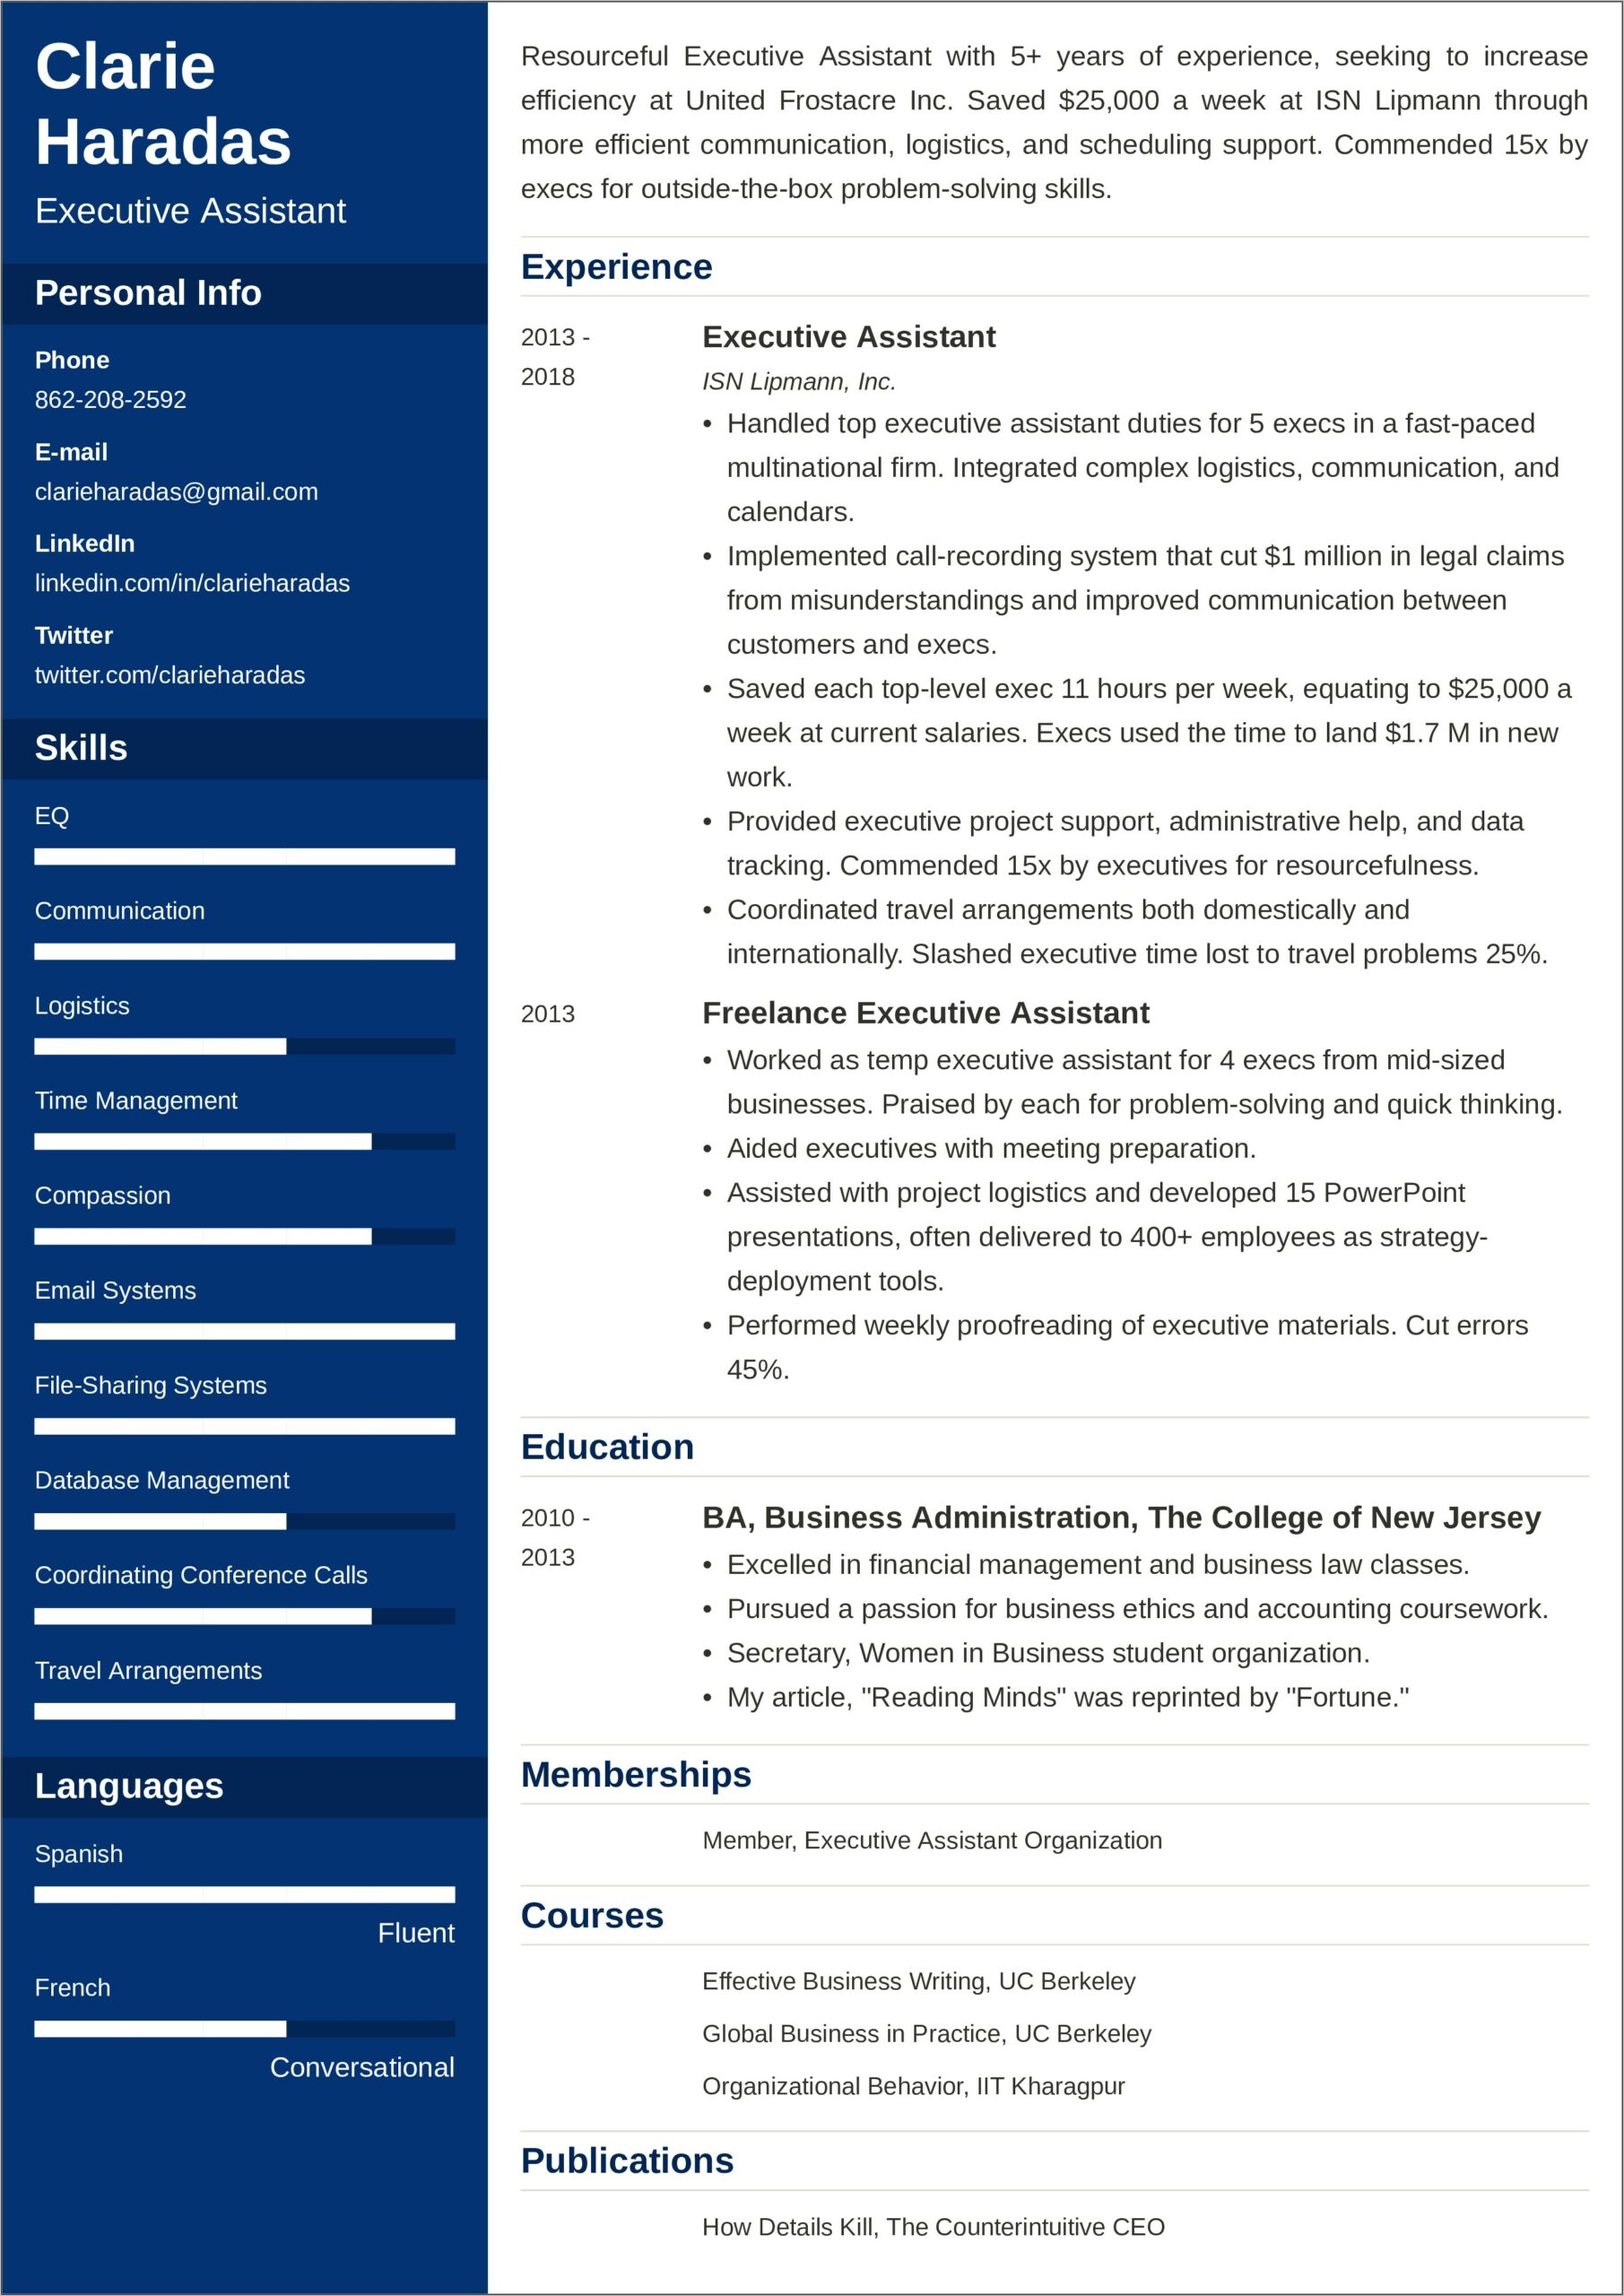 It Support Engineer Job Responsibilities Resume Format